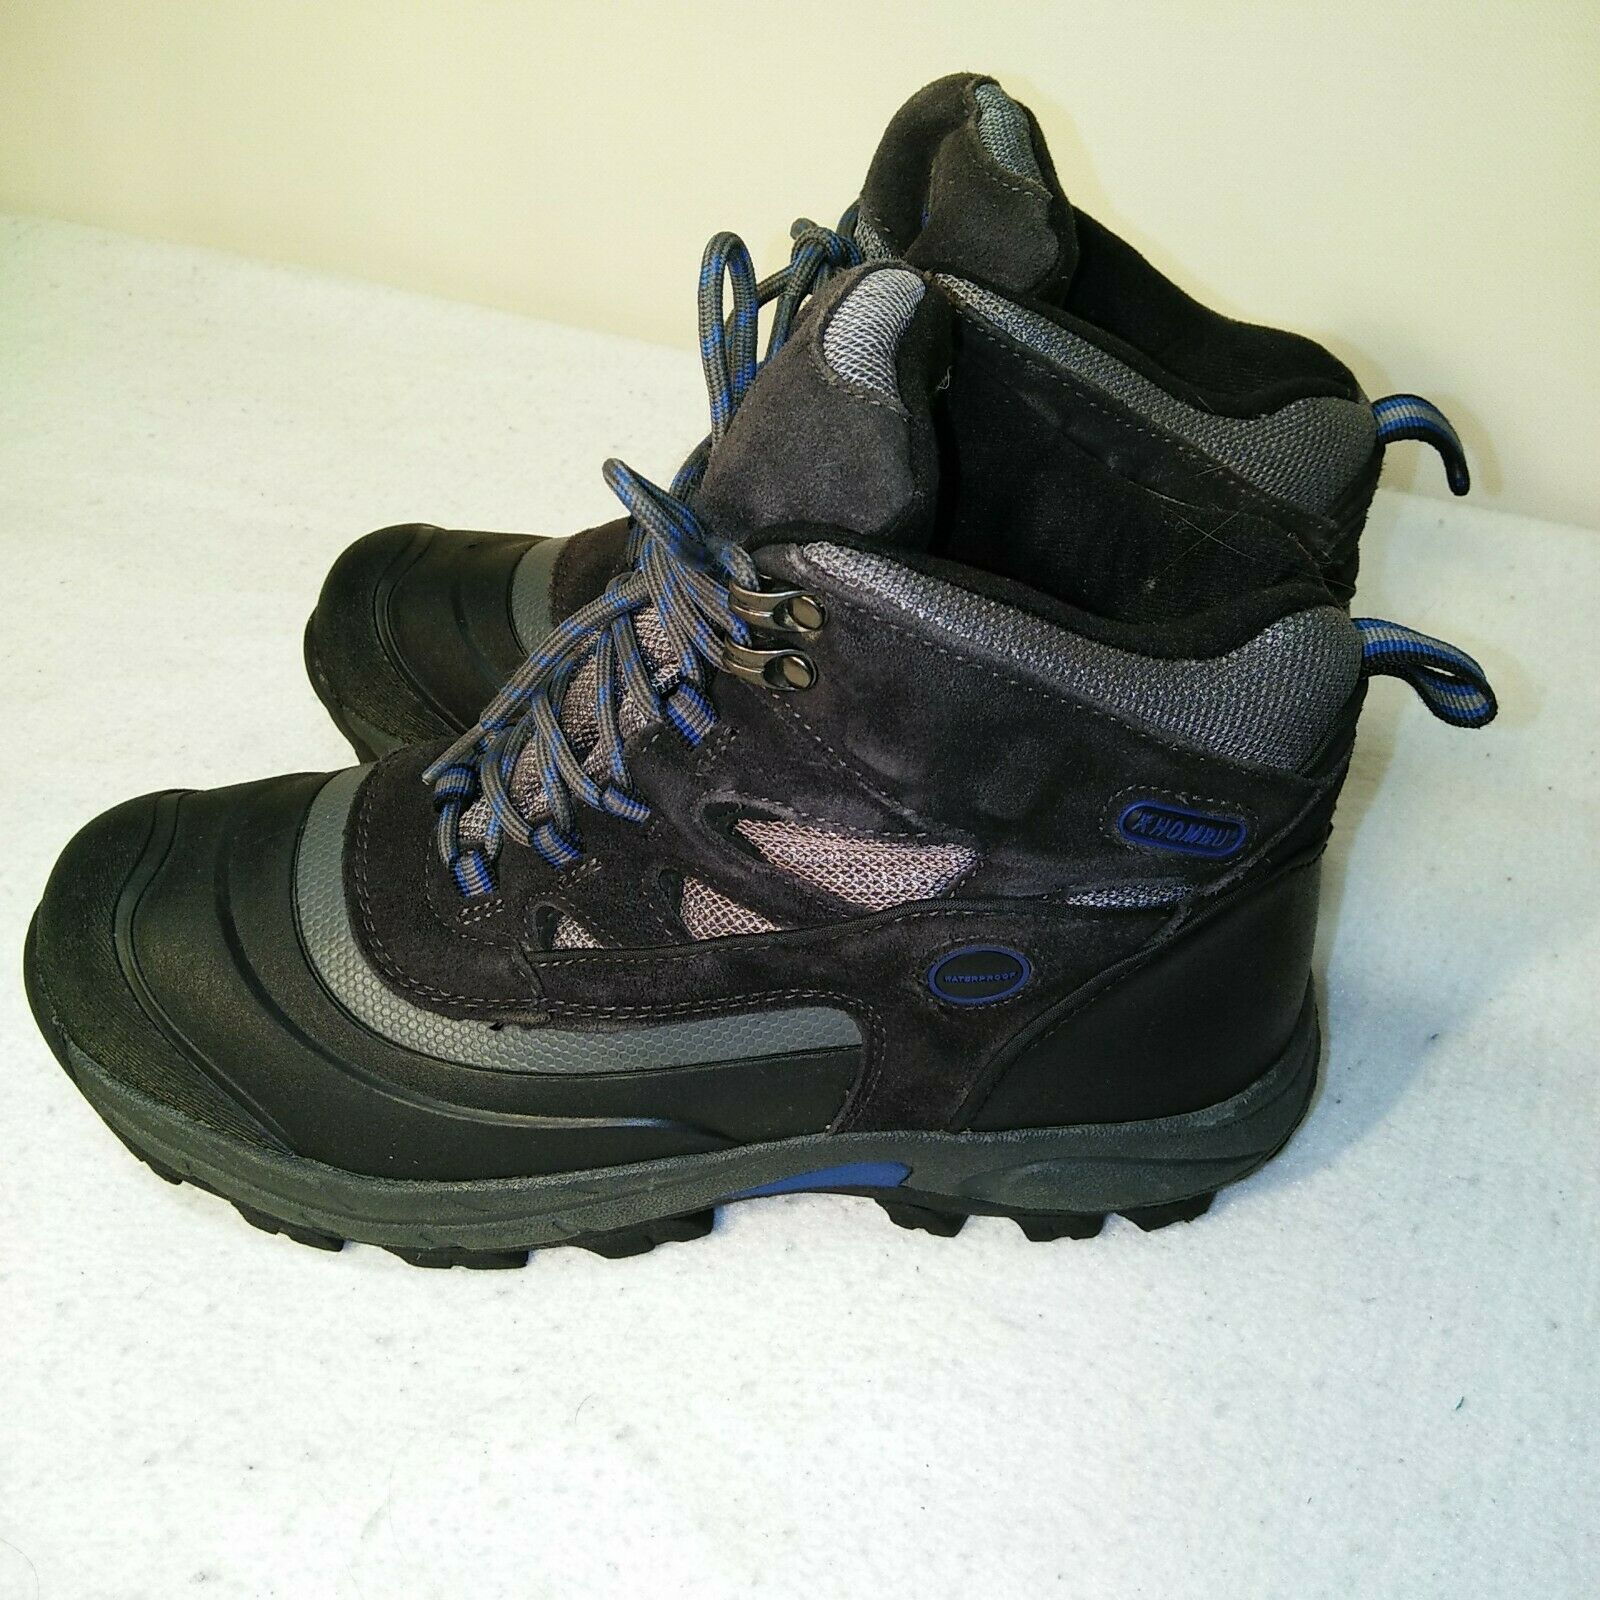 Khombu Men's Hiking Waterproof Snow Boots Black Fleet - Size 10